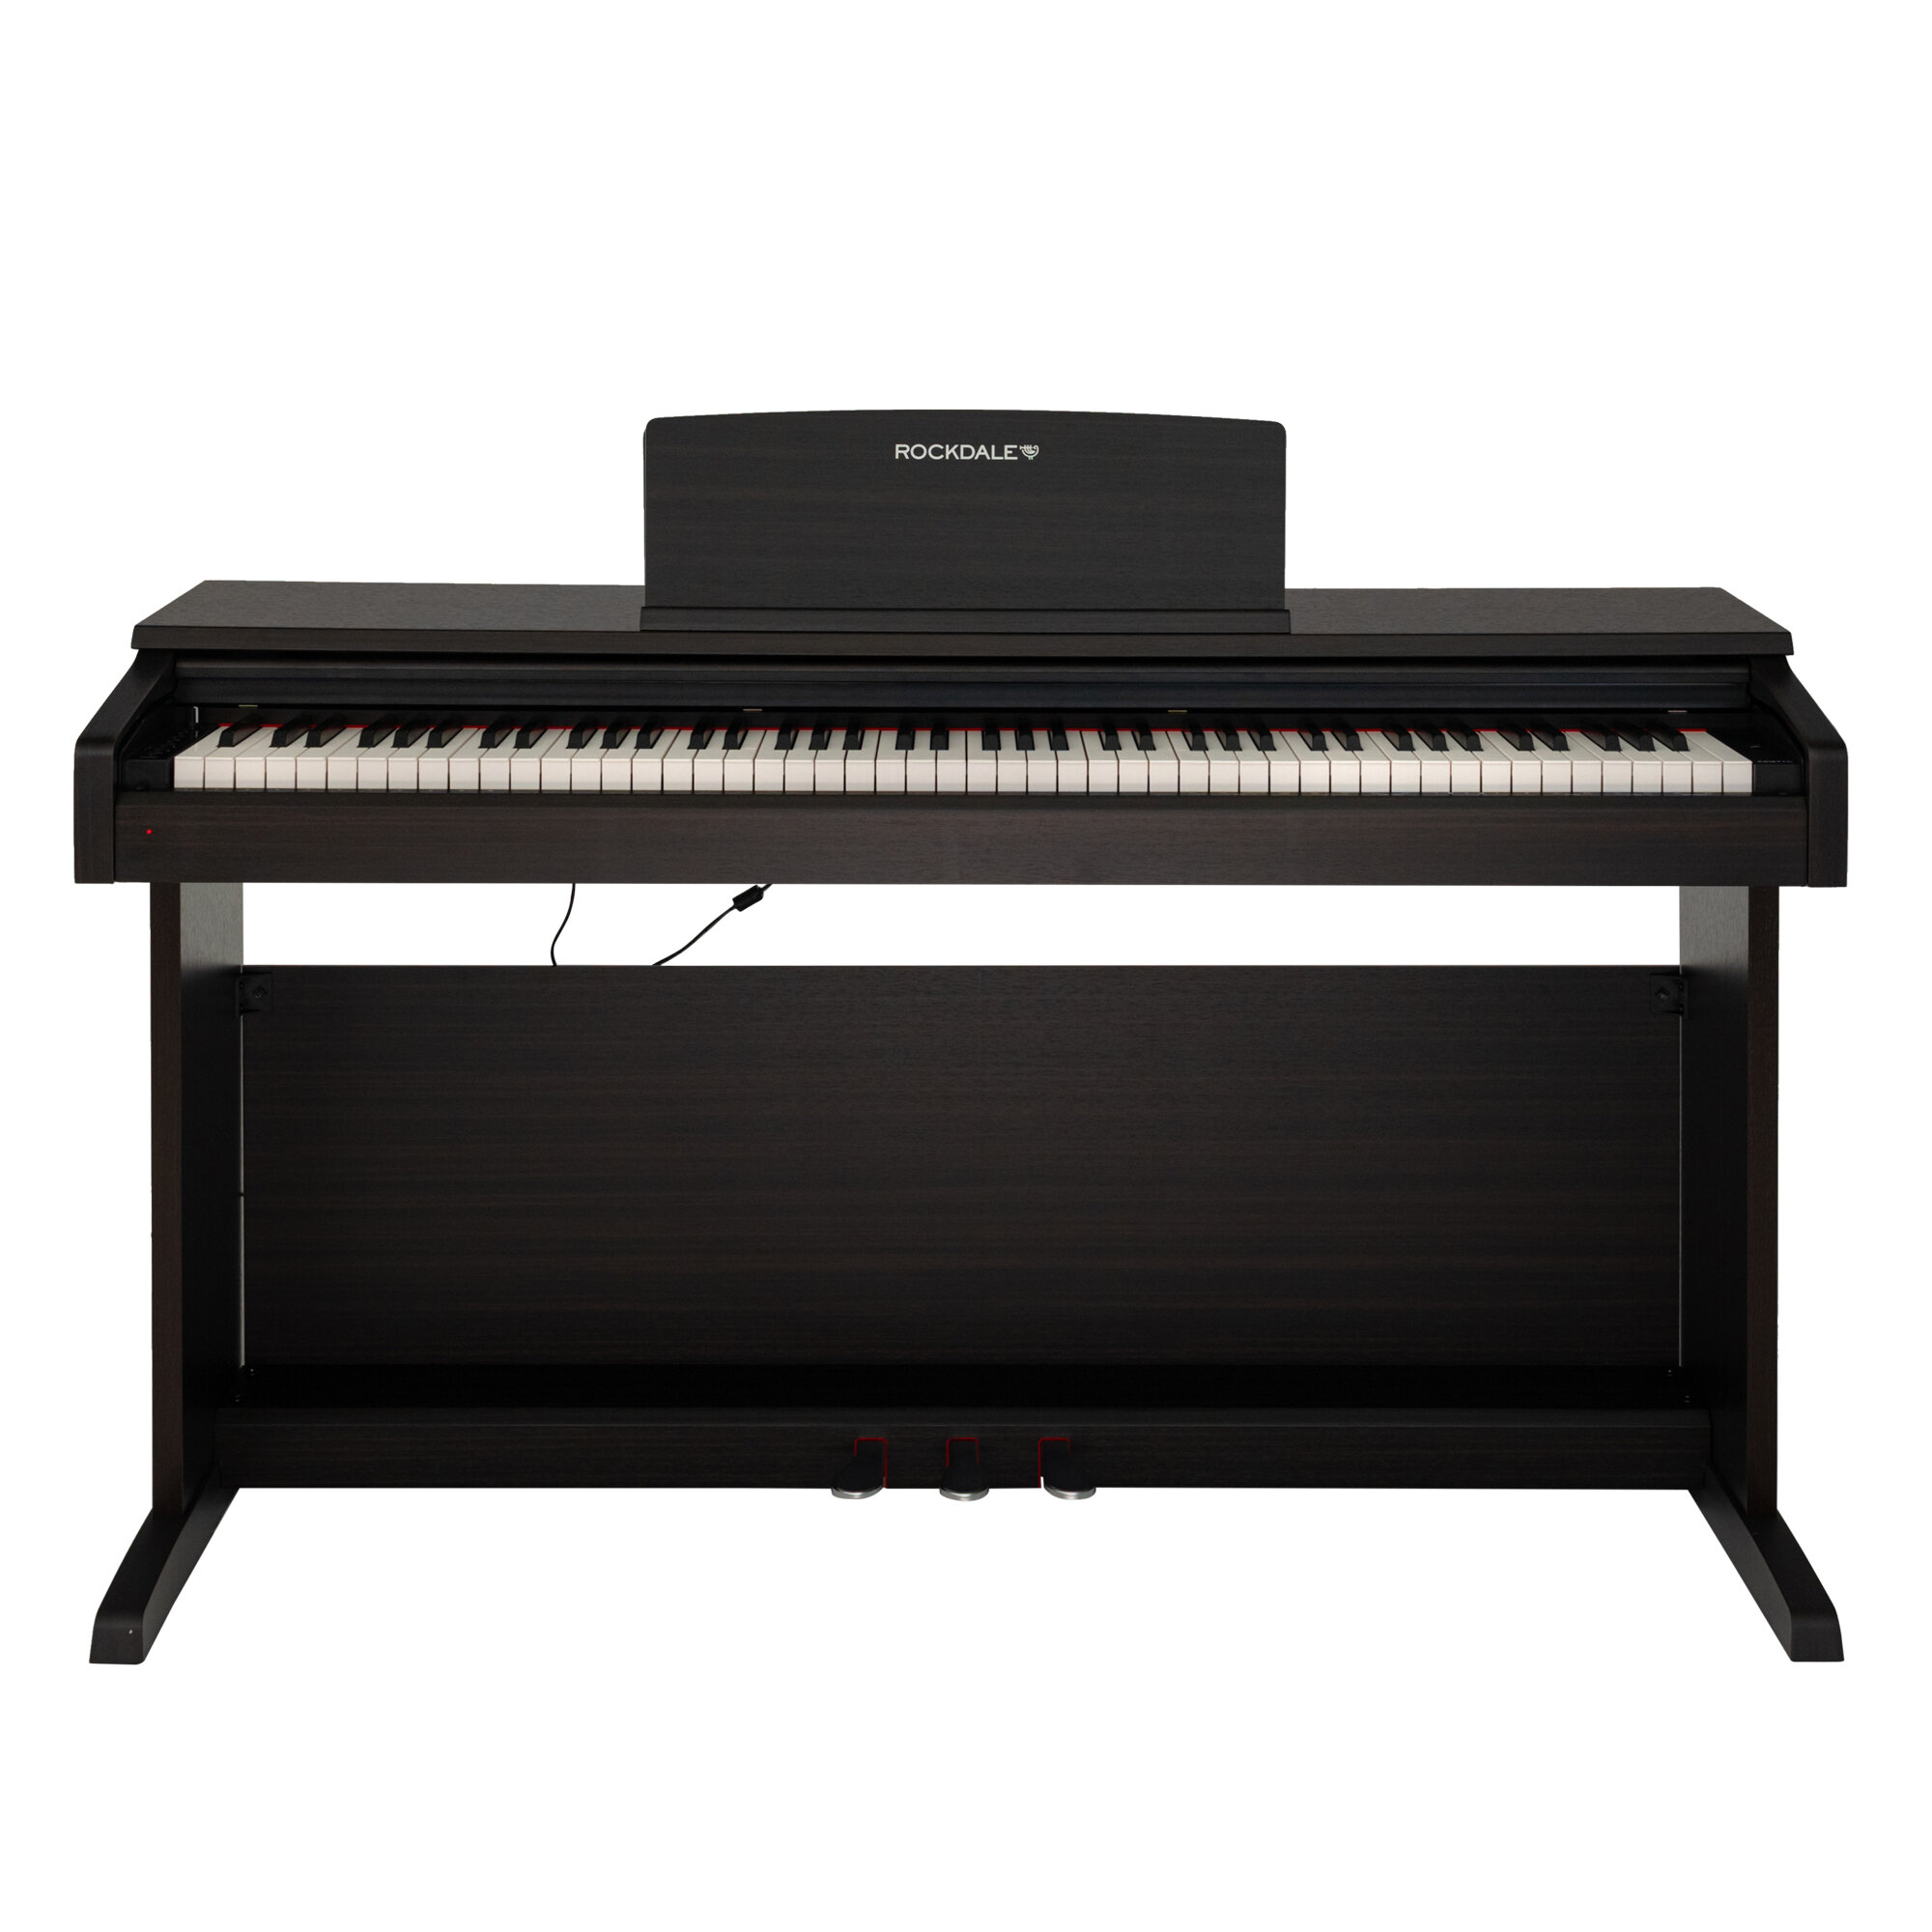 ROCKDALE Arietta Rosewood цифровое пианино 88 клавиш цвет палисандр